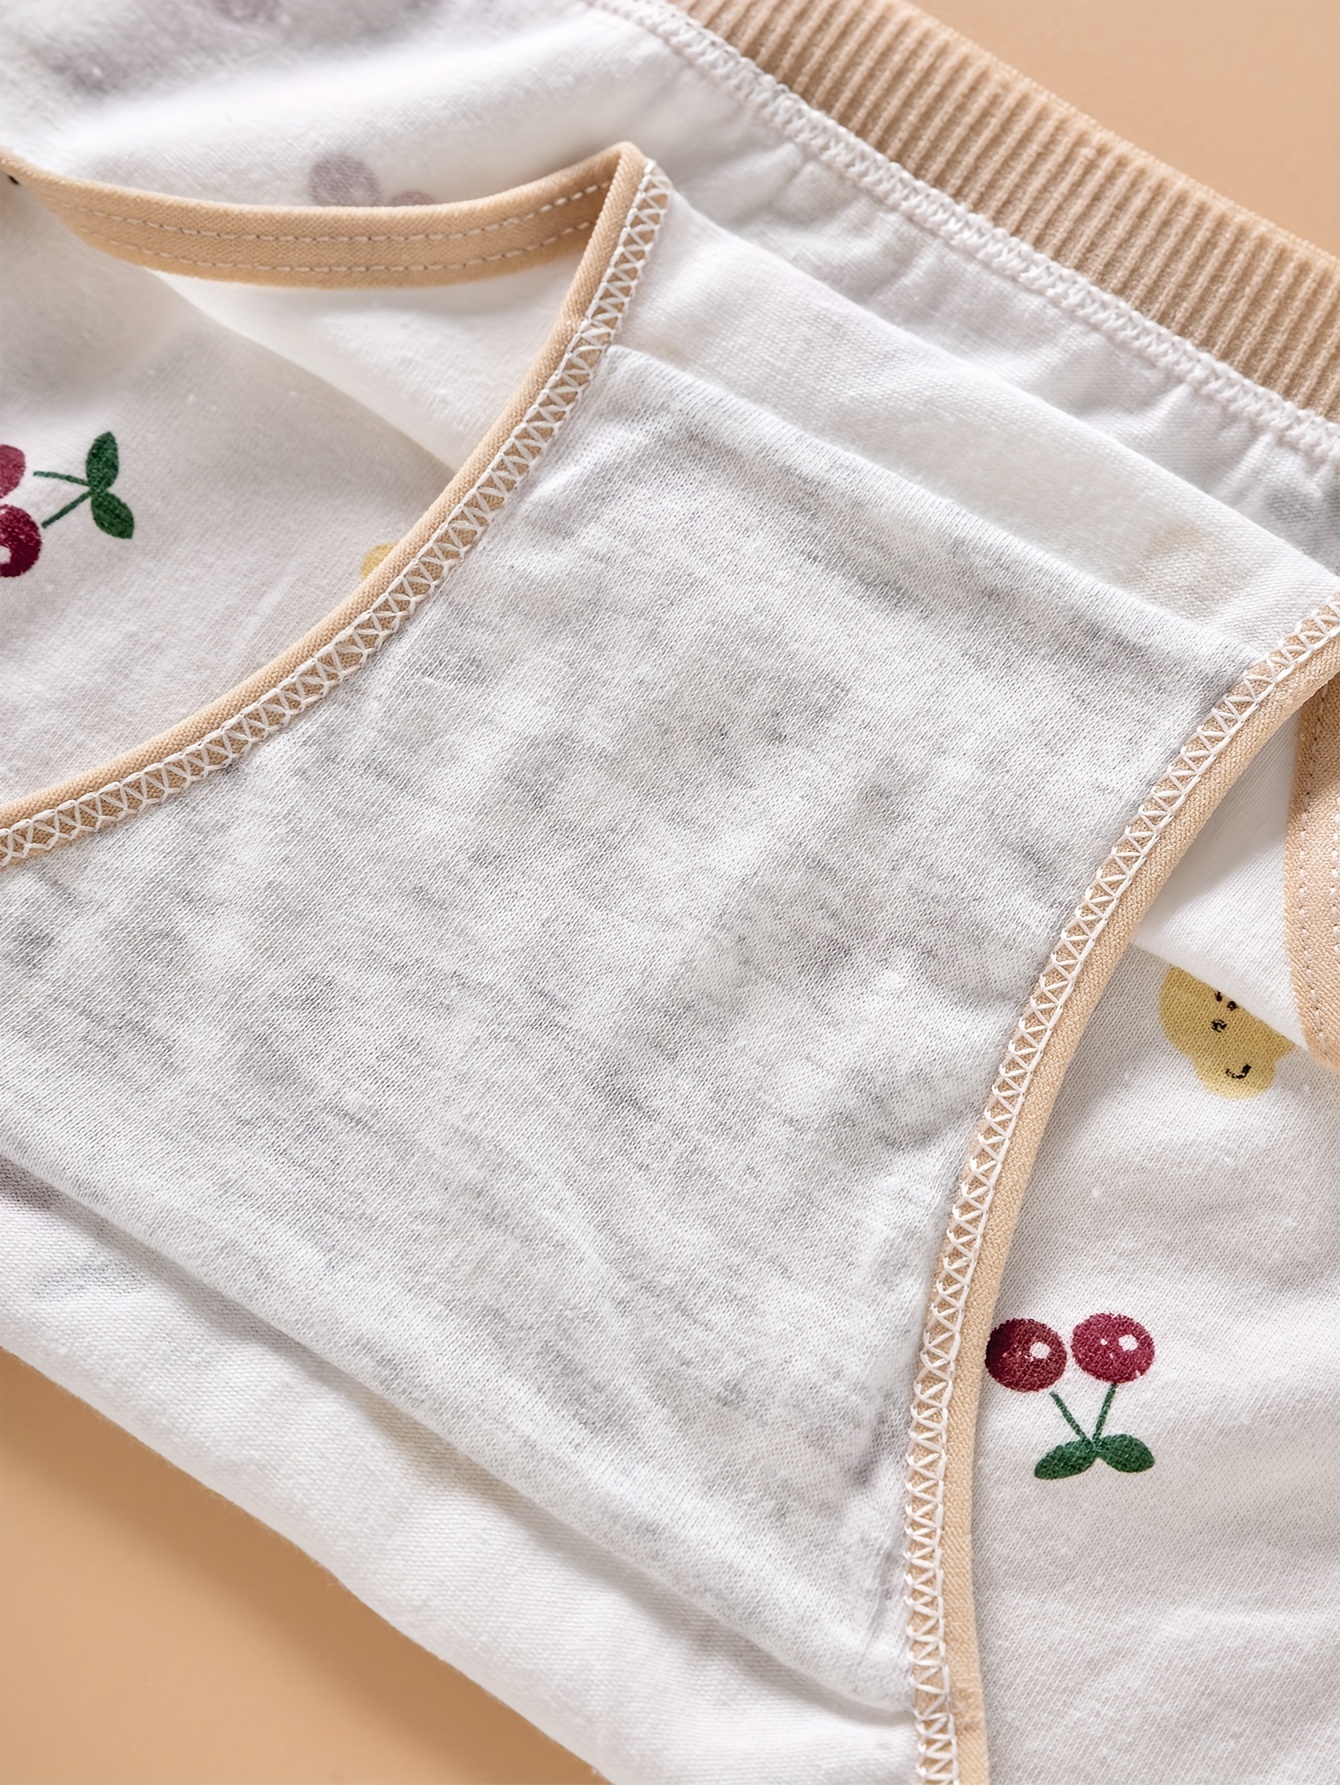 FallSweet Cartoon Bear Panty for Women Printing Underwear Girl Cute Cotton  Mid-waist Briefs